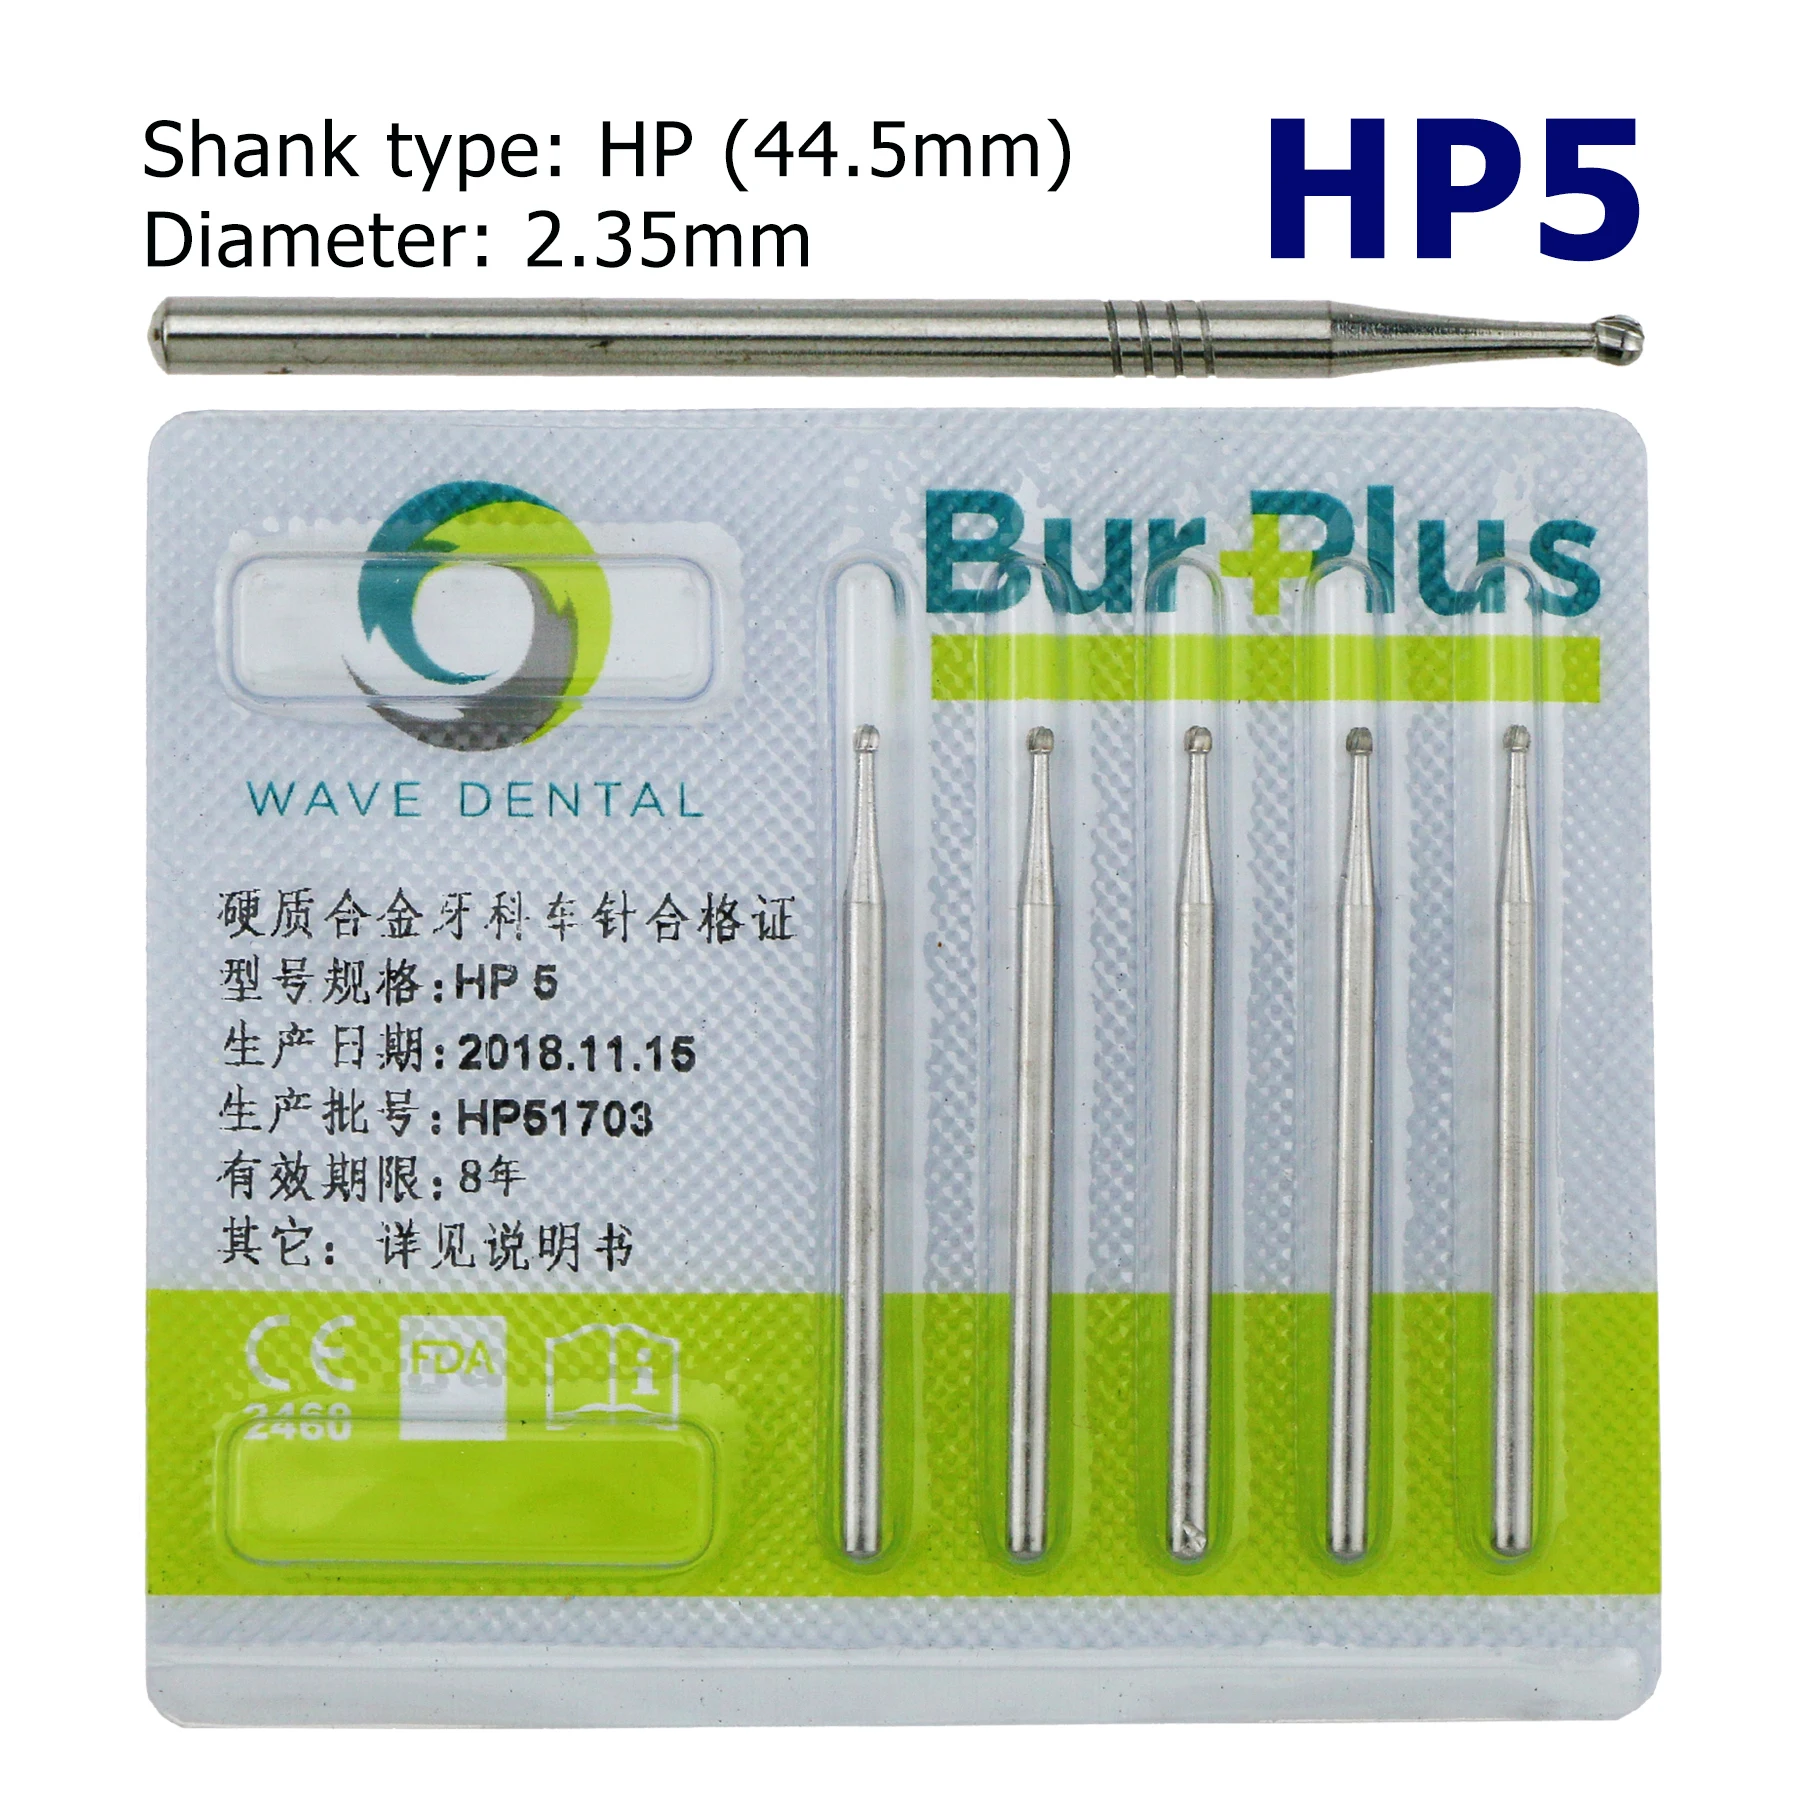 

5Pcs WAVE Dental Bur Plus Tungsten Carbide Round Drills Burs HP 5 Head 1.6mm For Low Speed Straight Nose Cone Handpiece 2.35mm